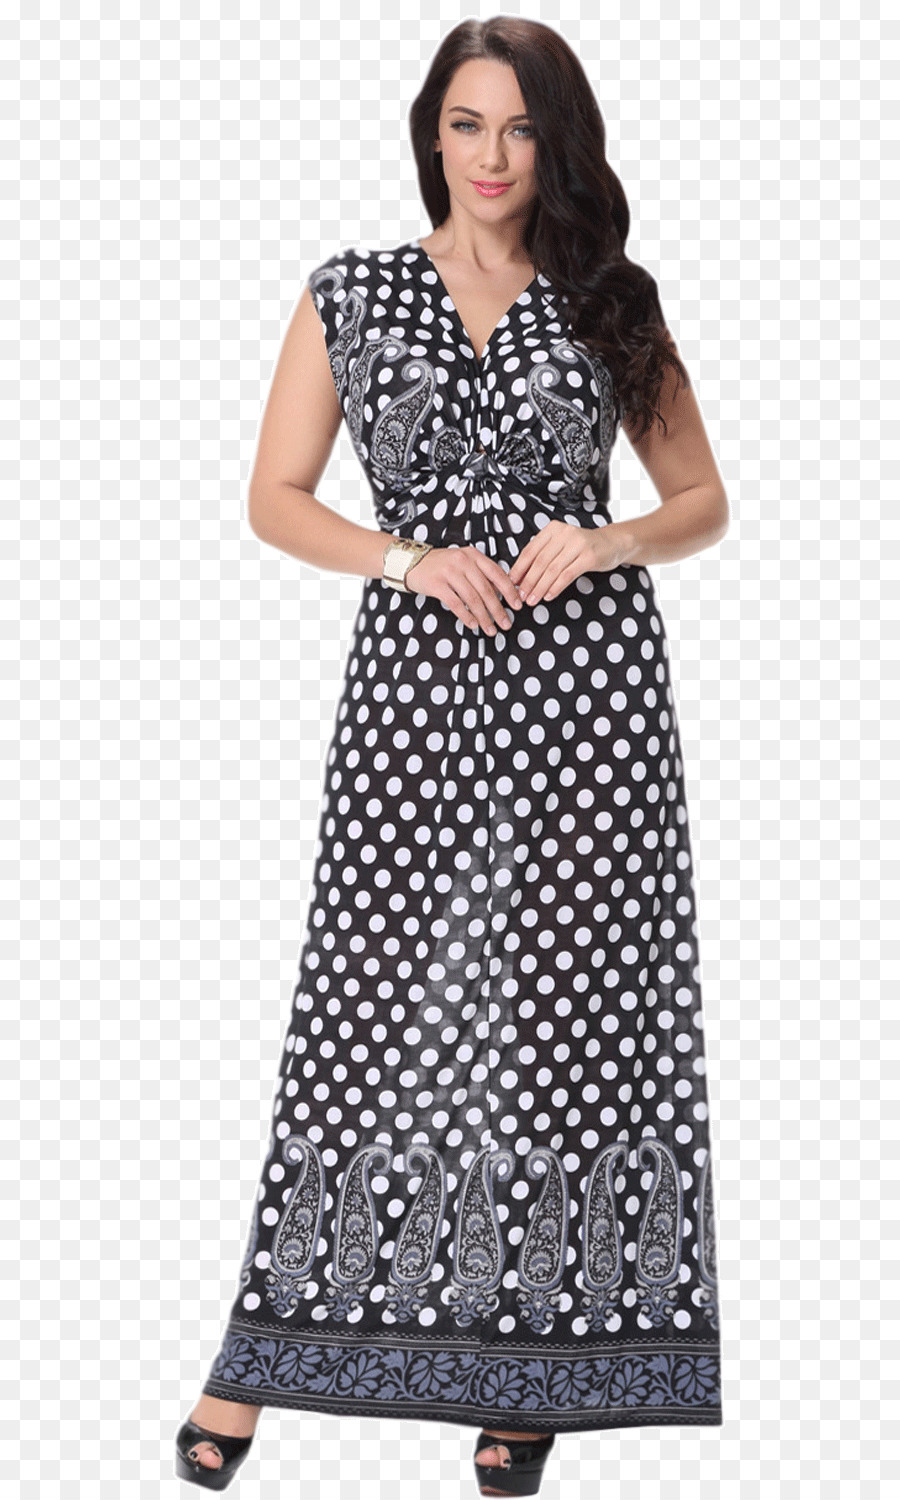 Kleid Polka dot Ärmel Ausschnitt Plus-size-Kleidung - Plus size Kleidung